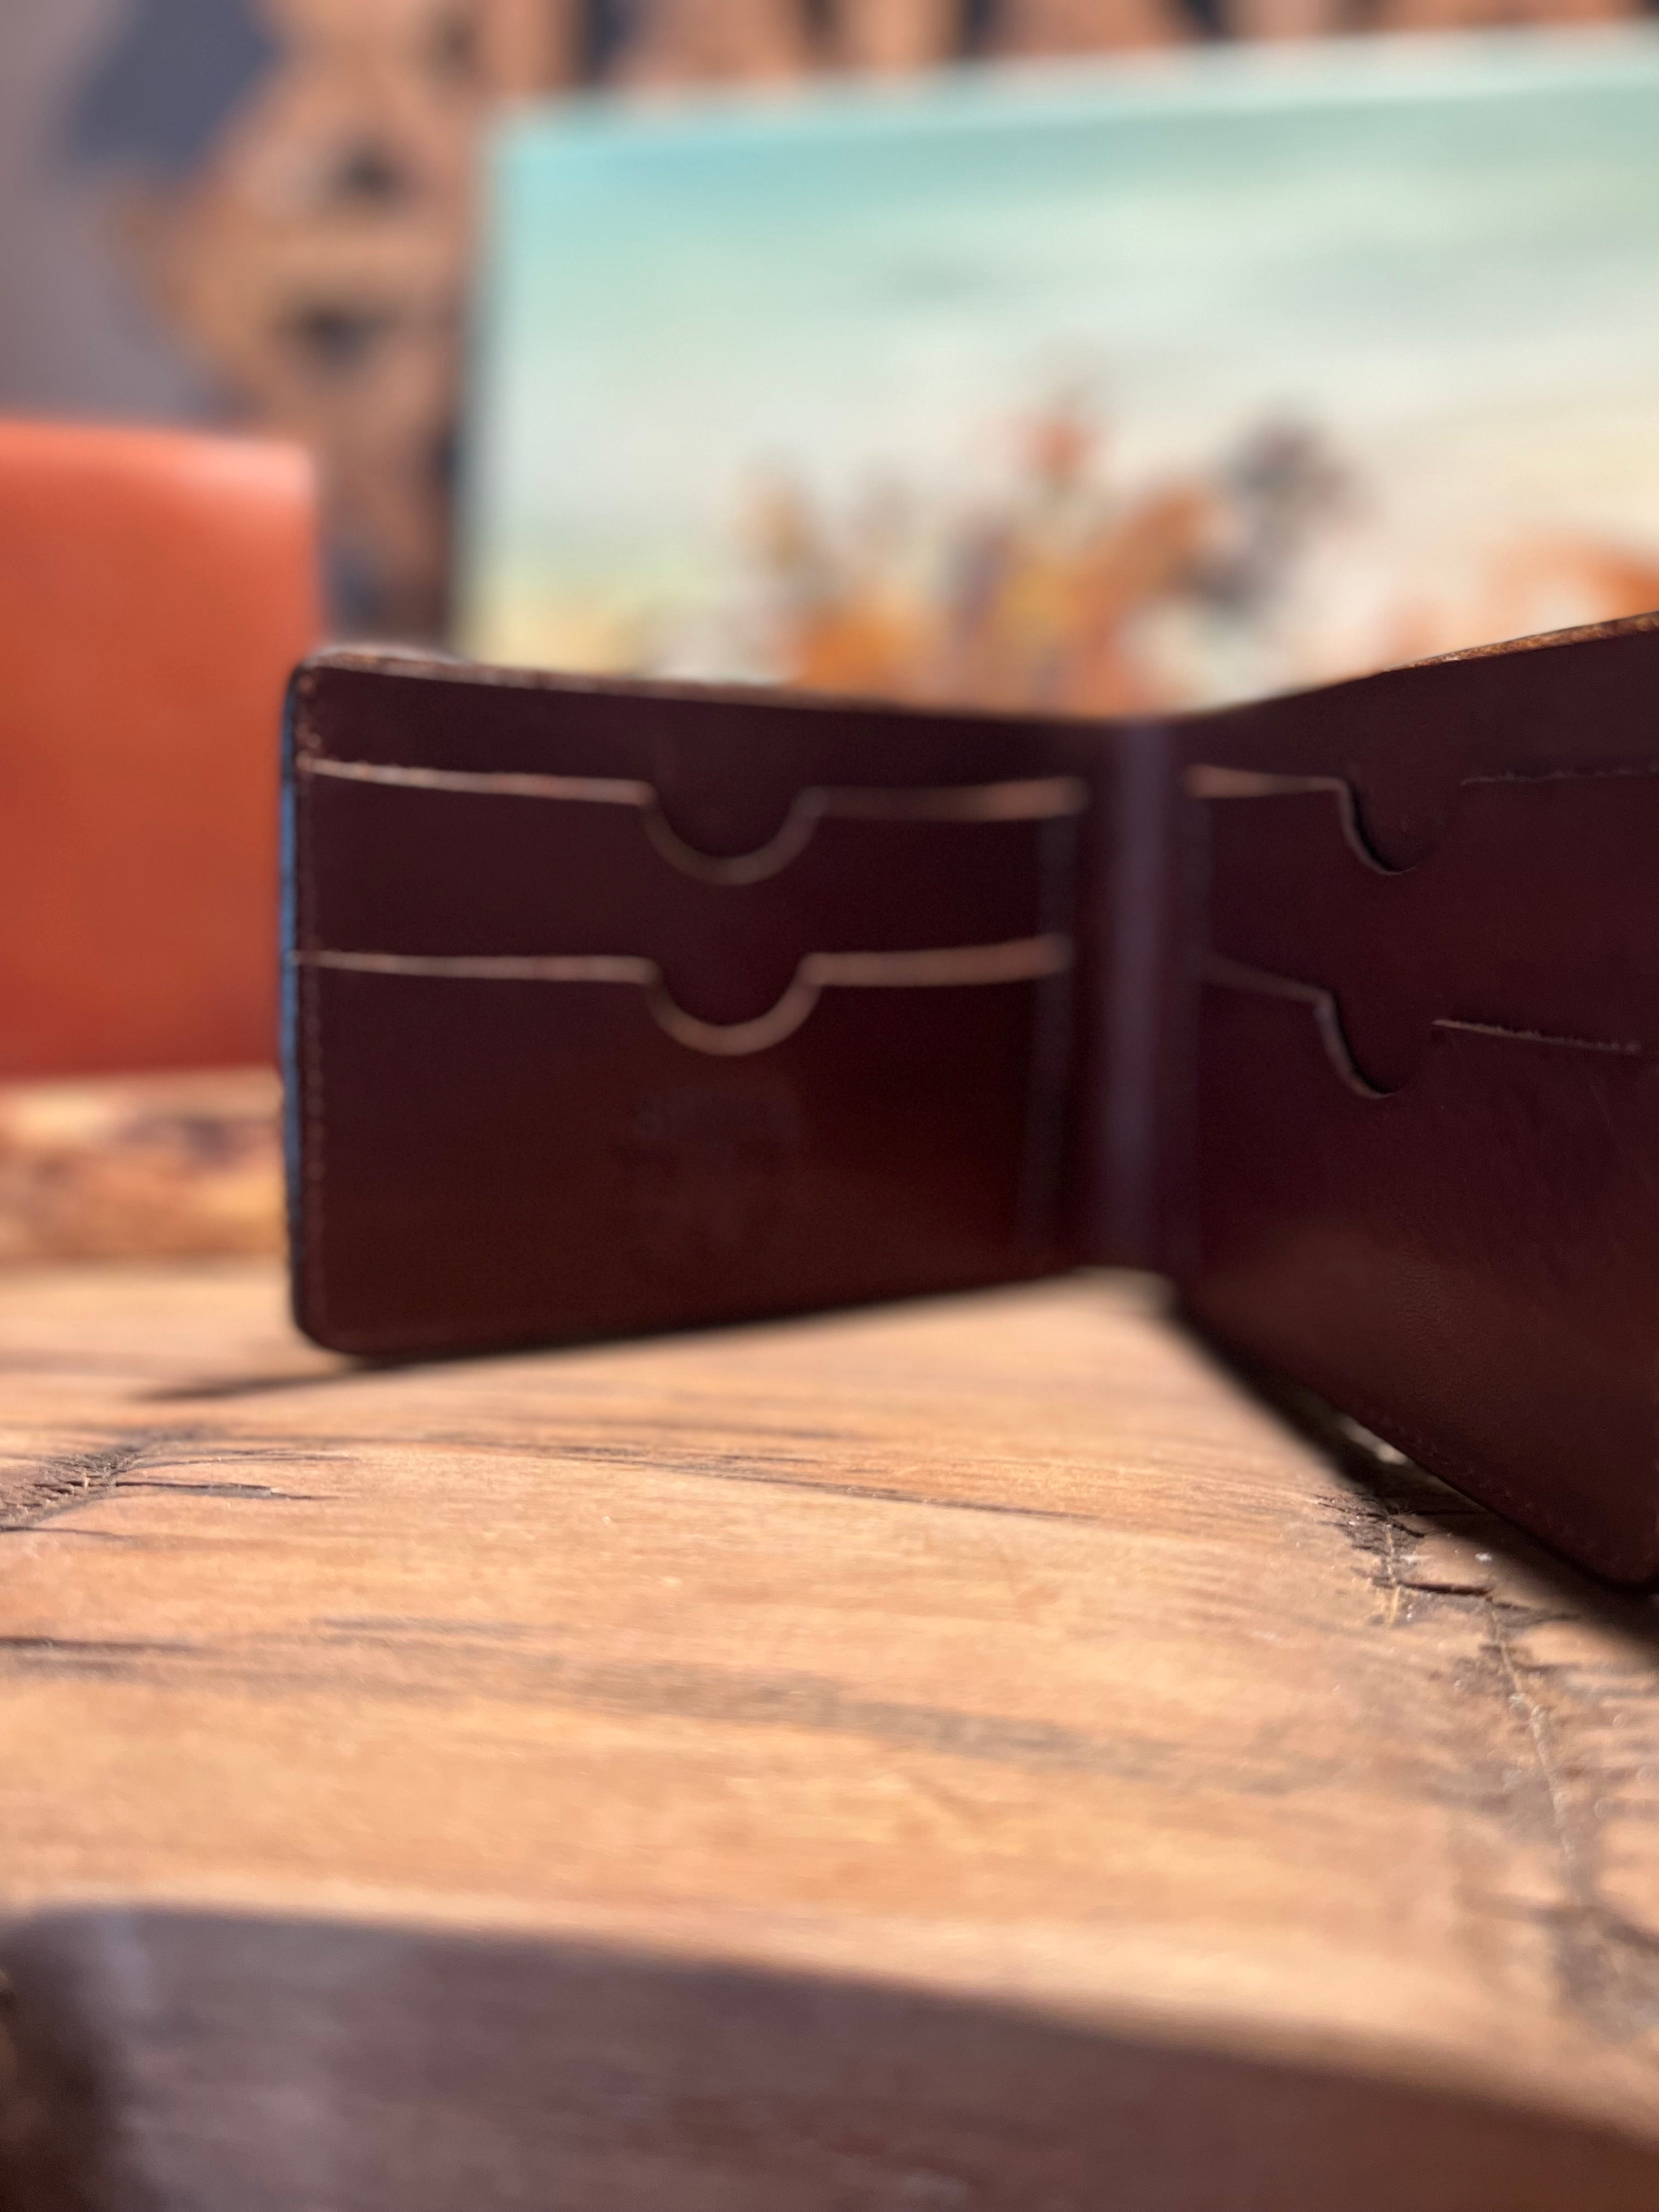 Bifold Leather Wallet for Men Rio Latigo Brown